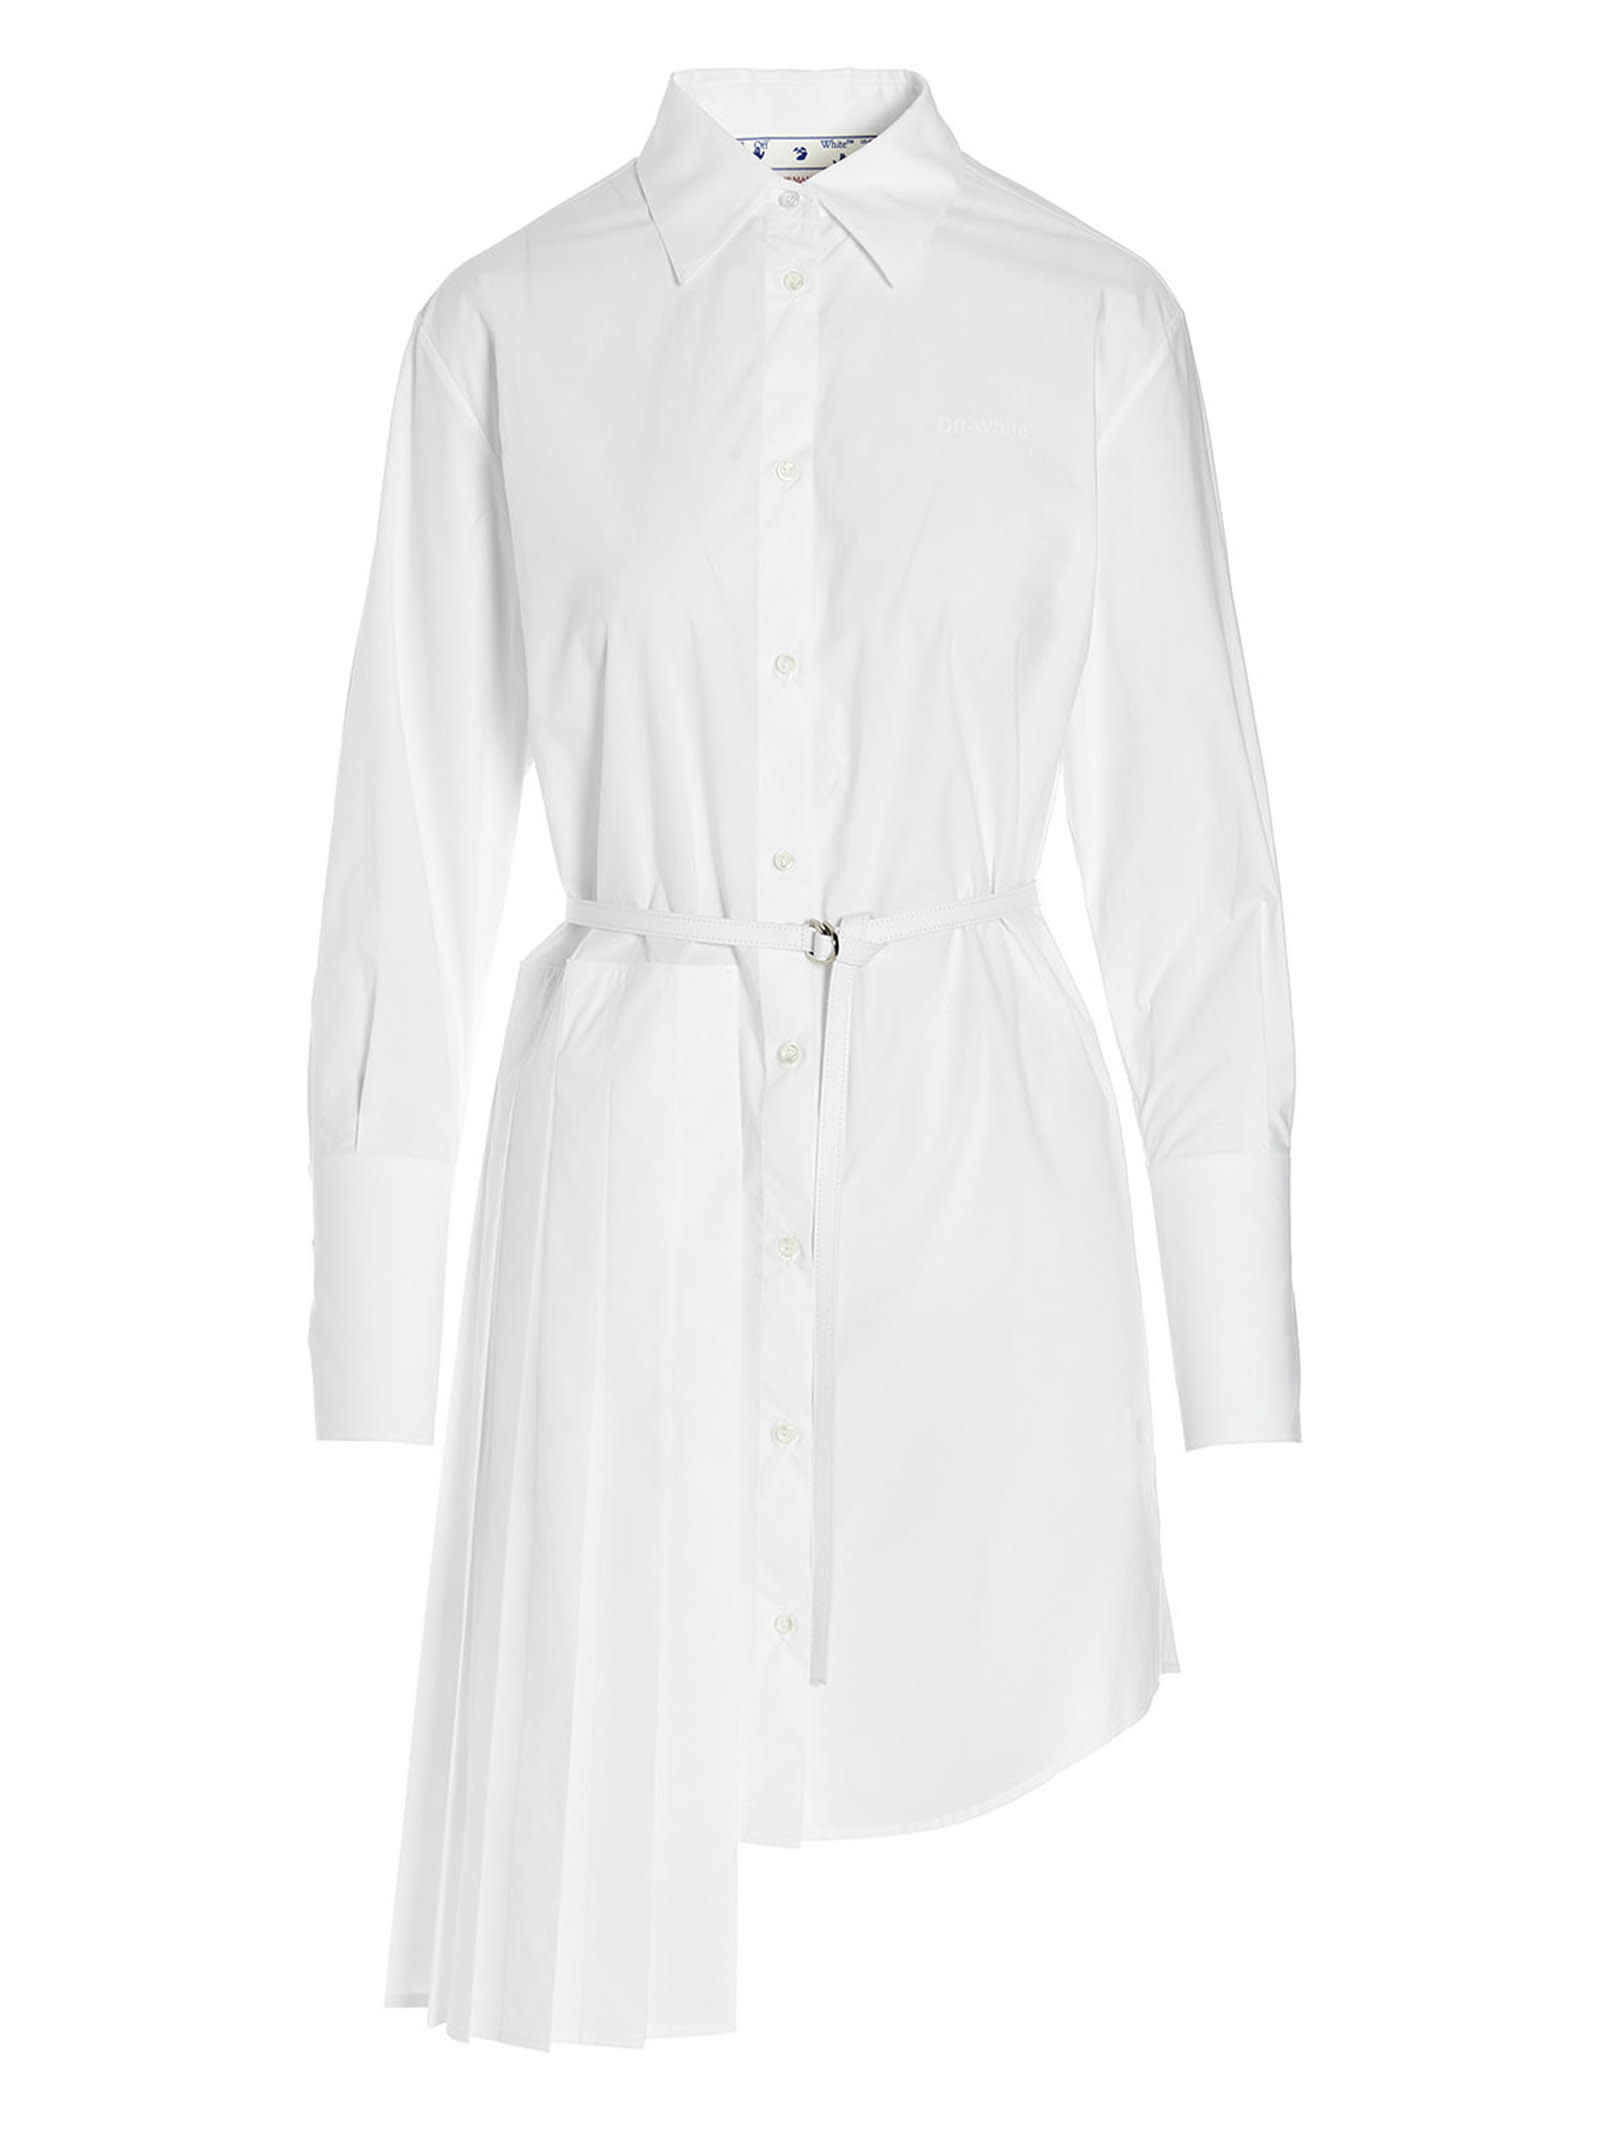 OFF-WHITE DIAGONAL SHIRT DRESS 